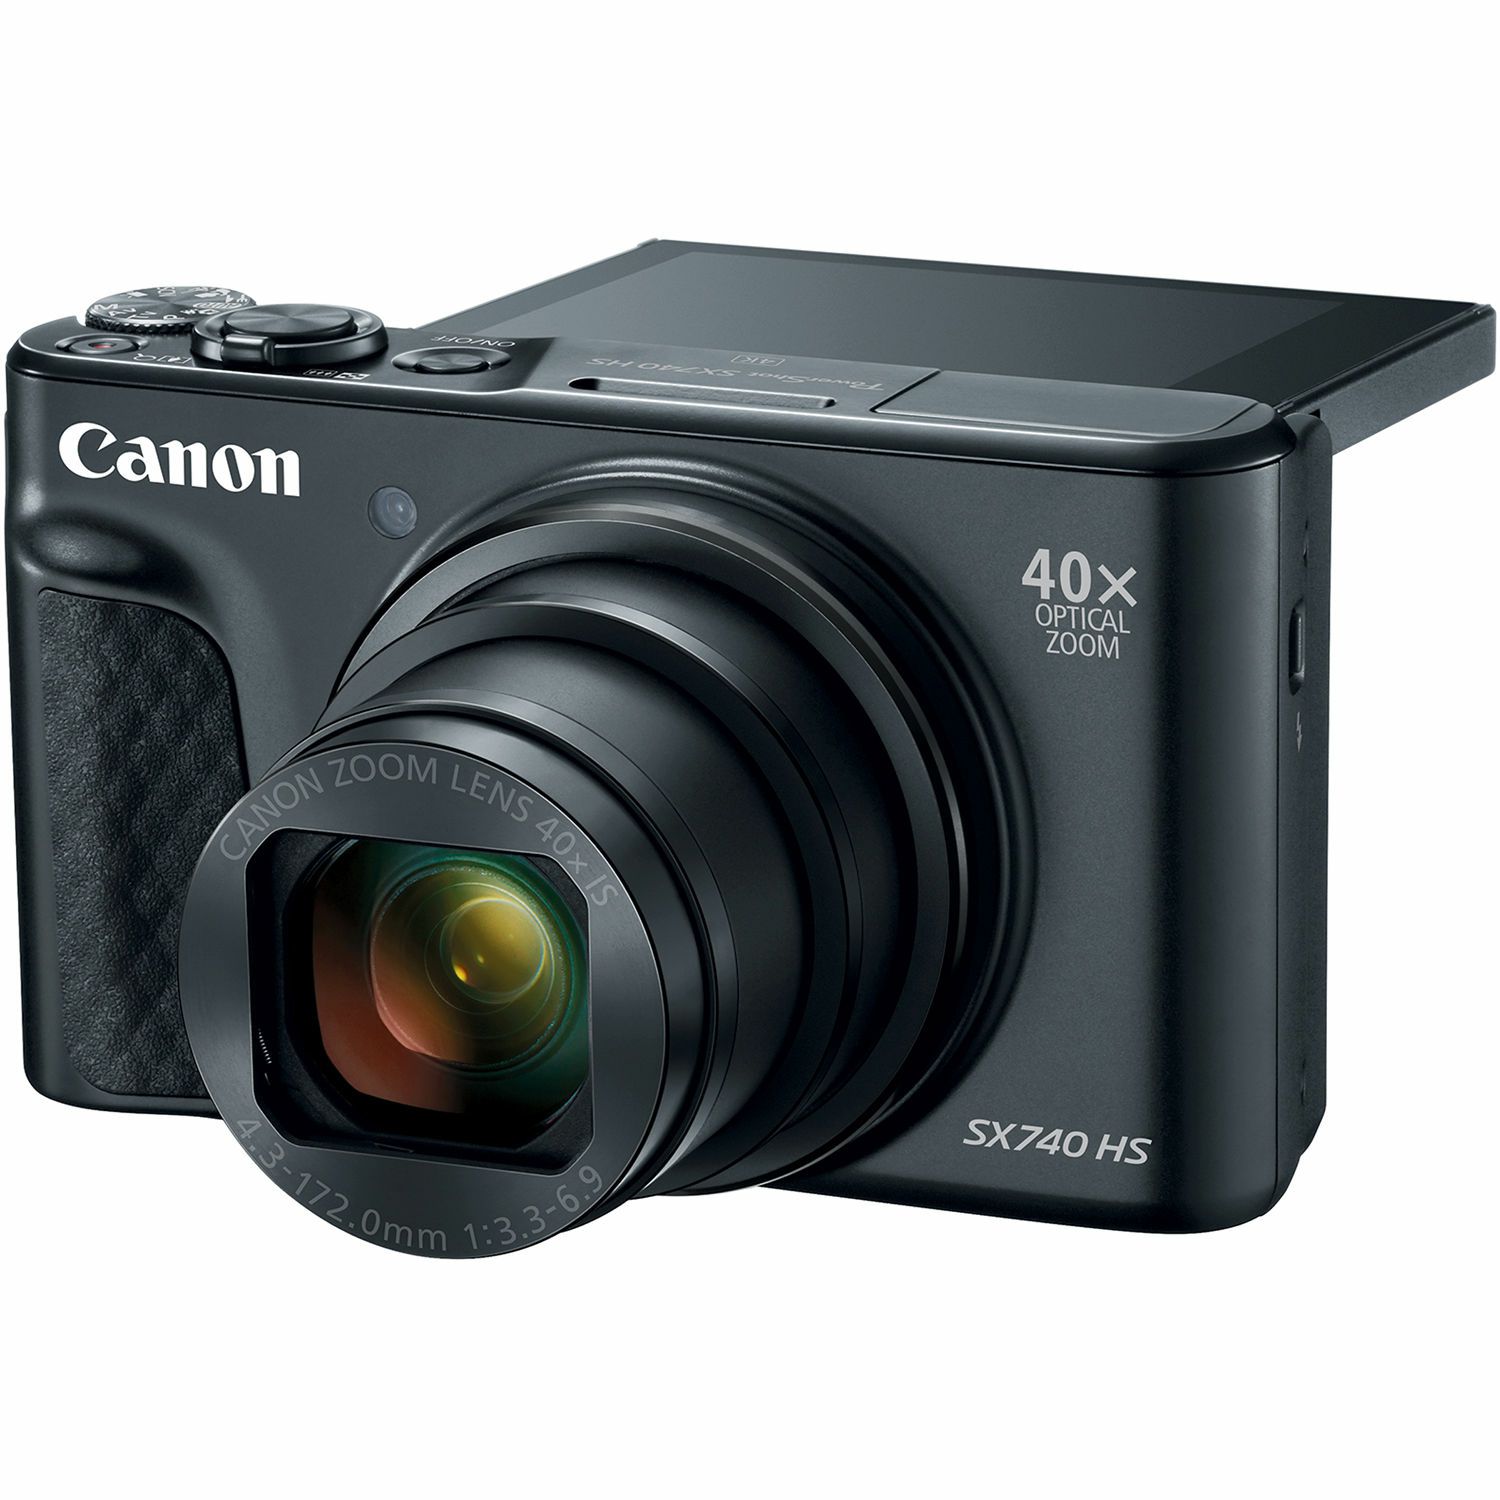 Canon PowerShot SX740 HS Black crni kompaktni digitalni fotoaparat 4K 40x zoom (2955C002AA)